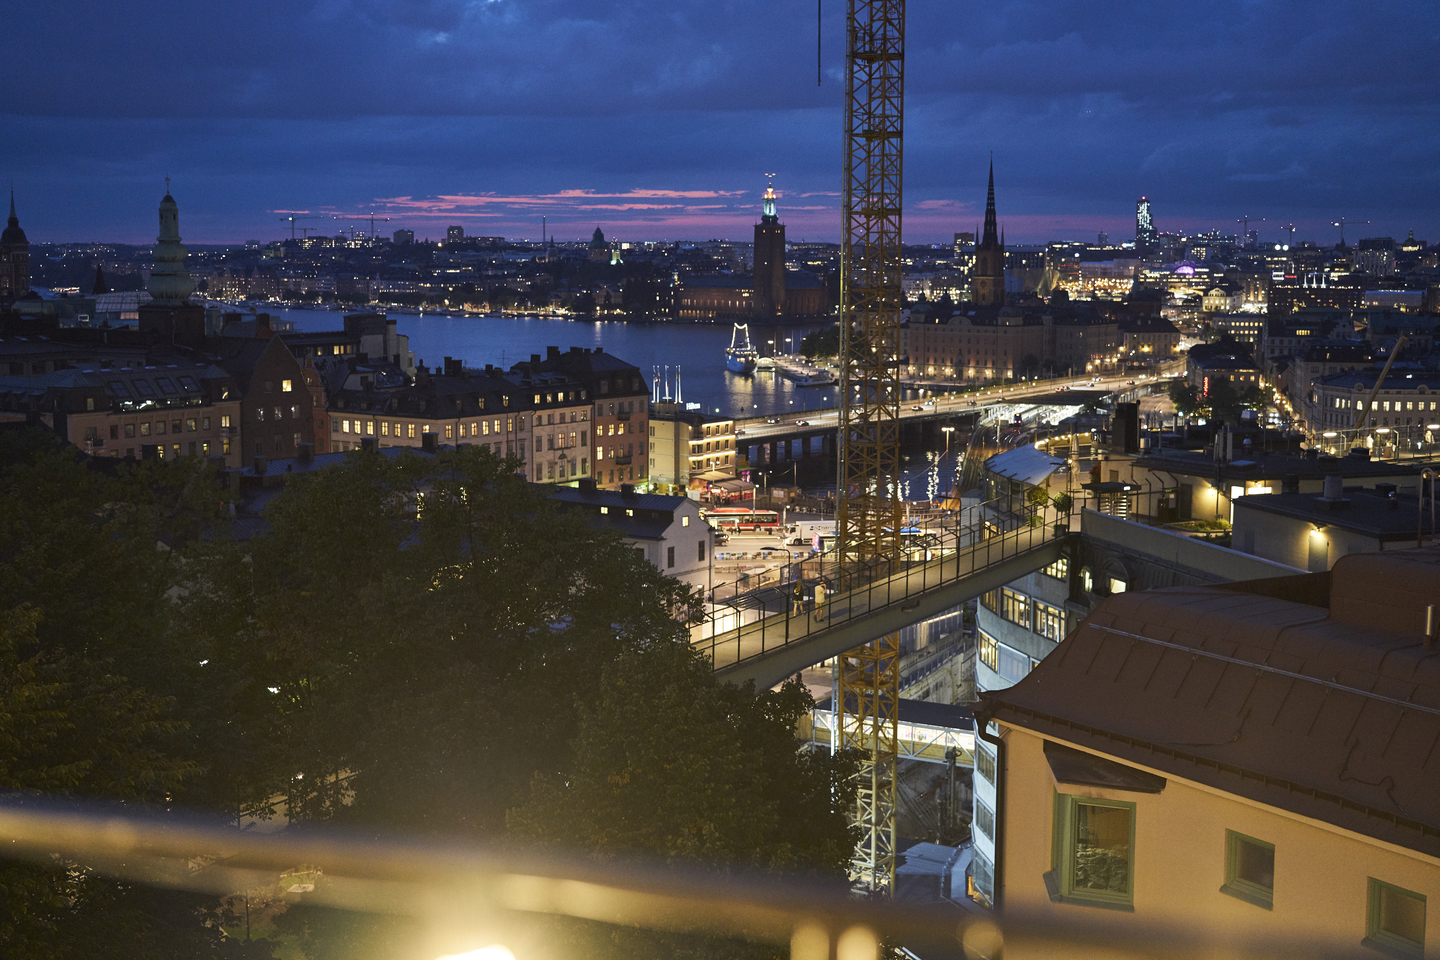 Stockholm's evening skyline. Photo by Richard Pflaume/Daimler AG